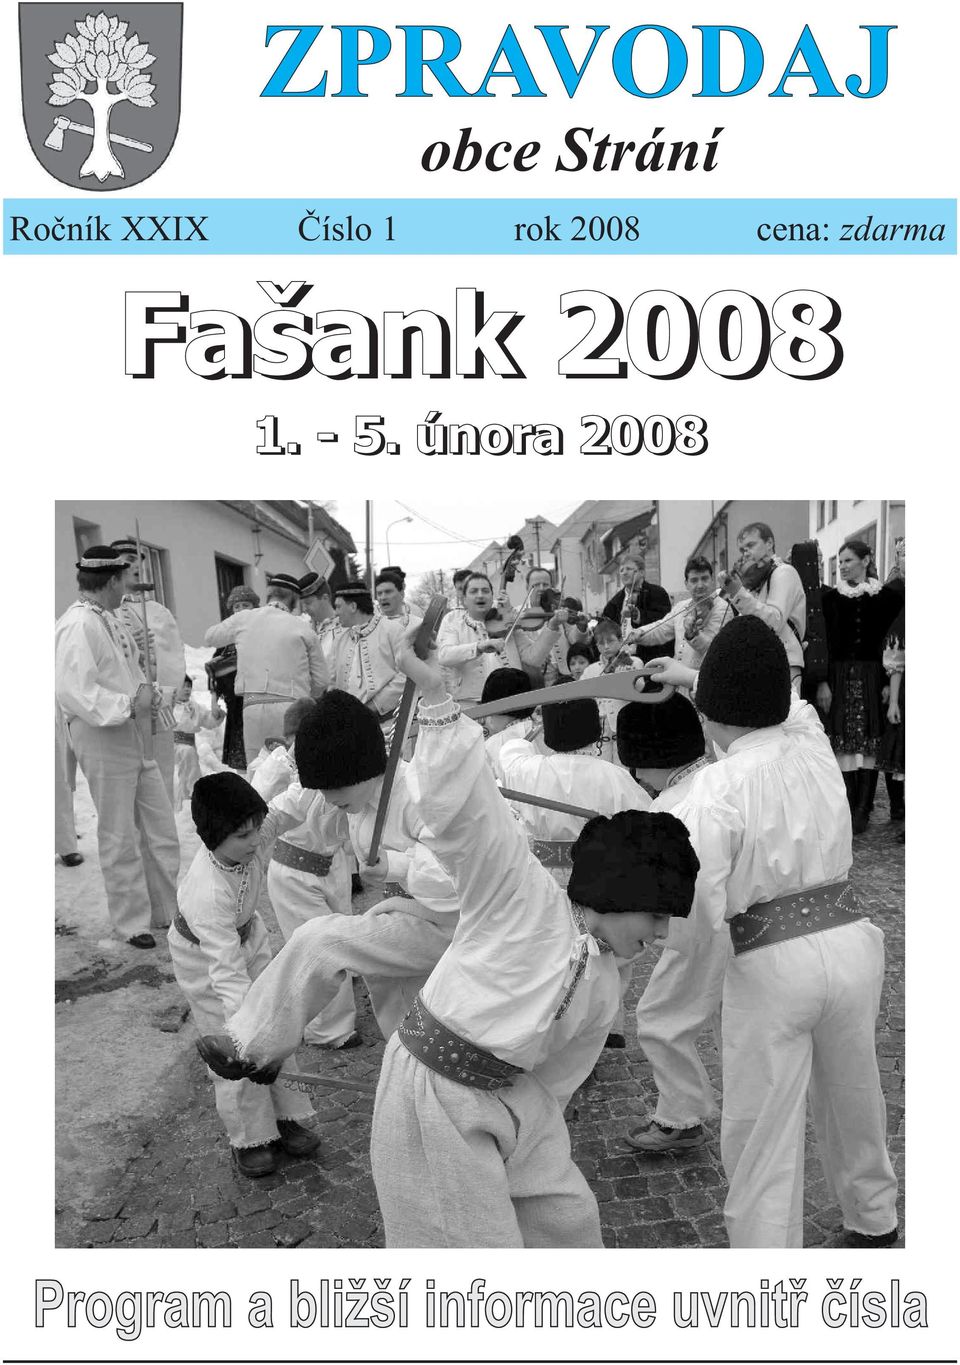 Fašank 2008 1. - 5.